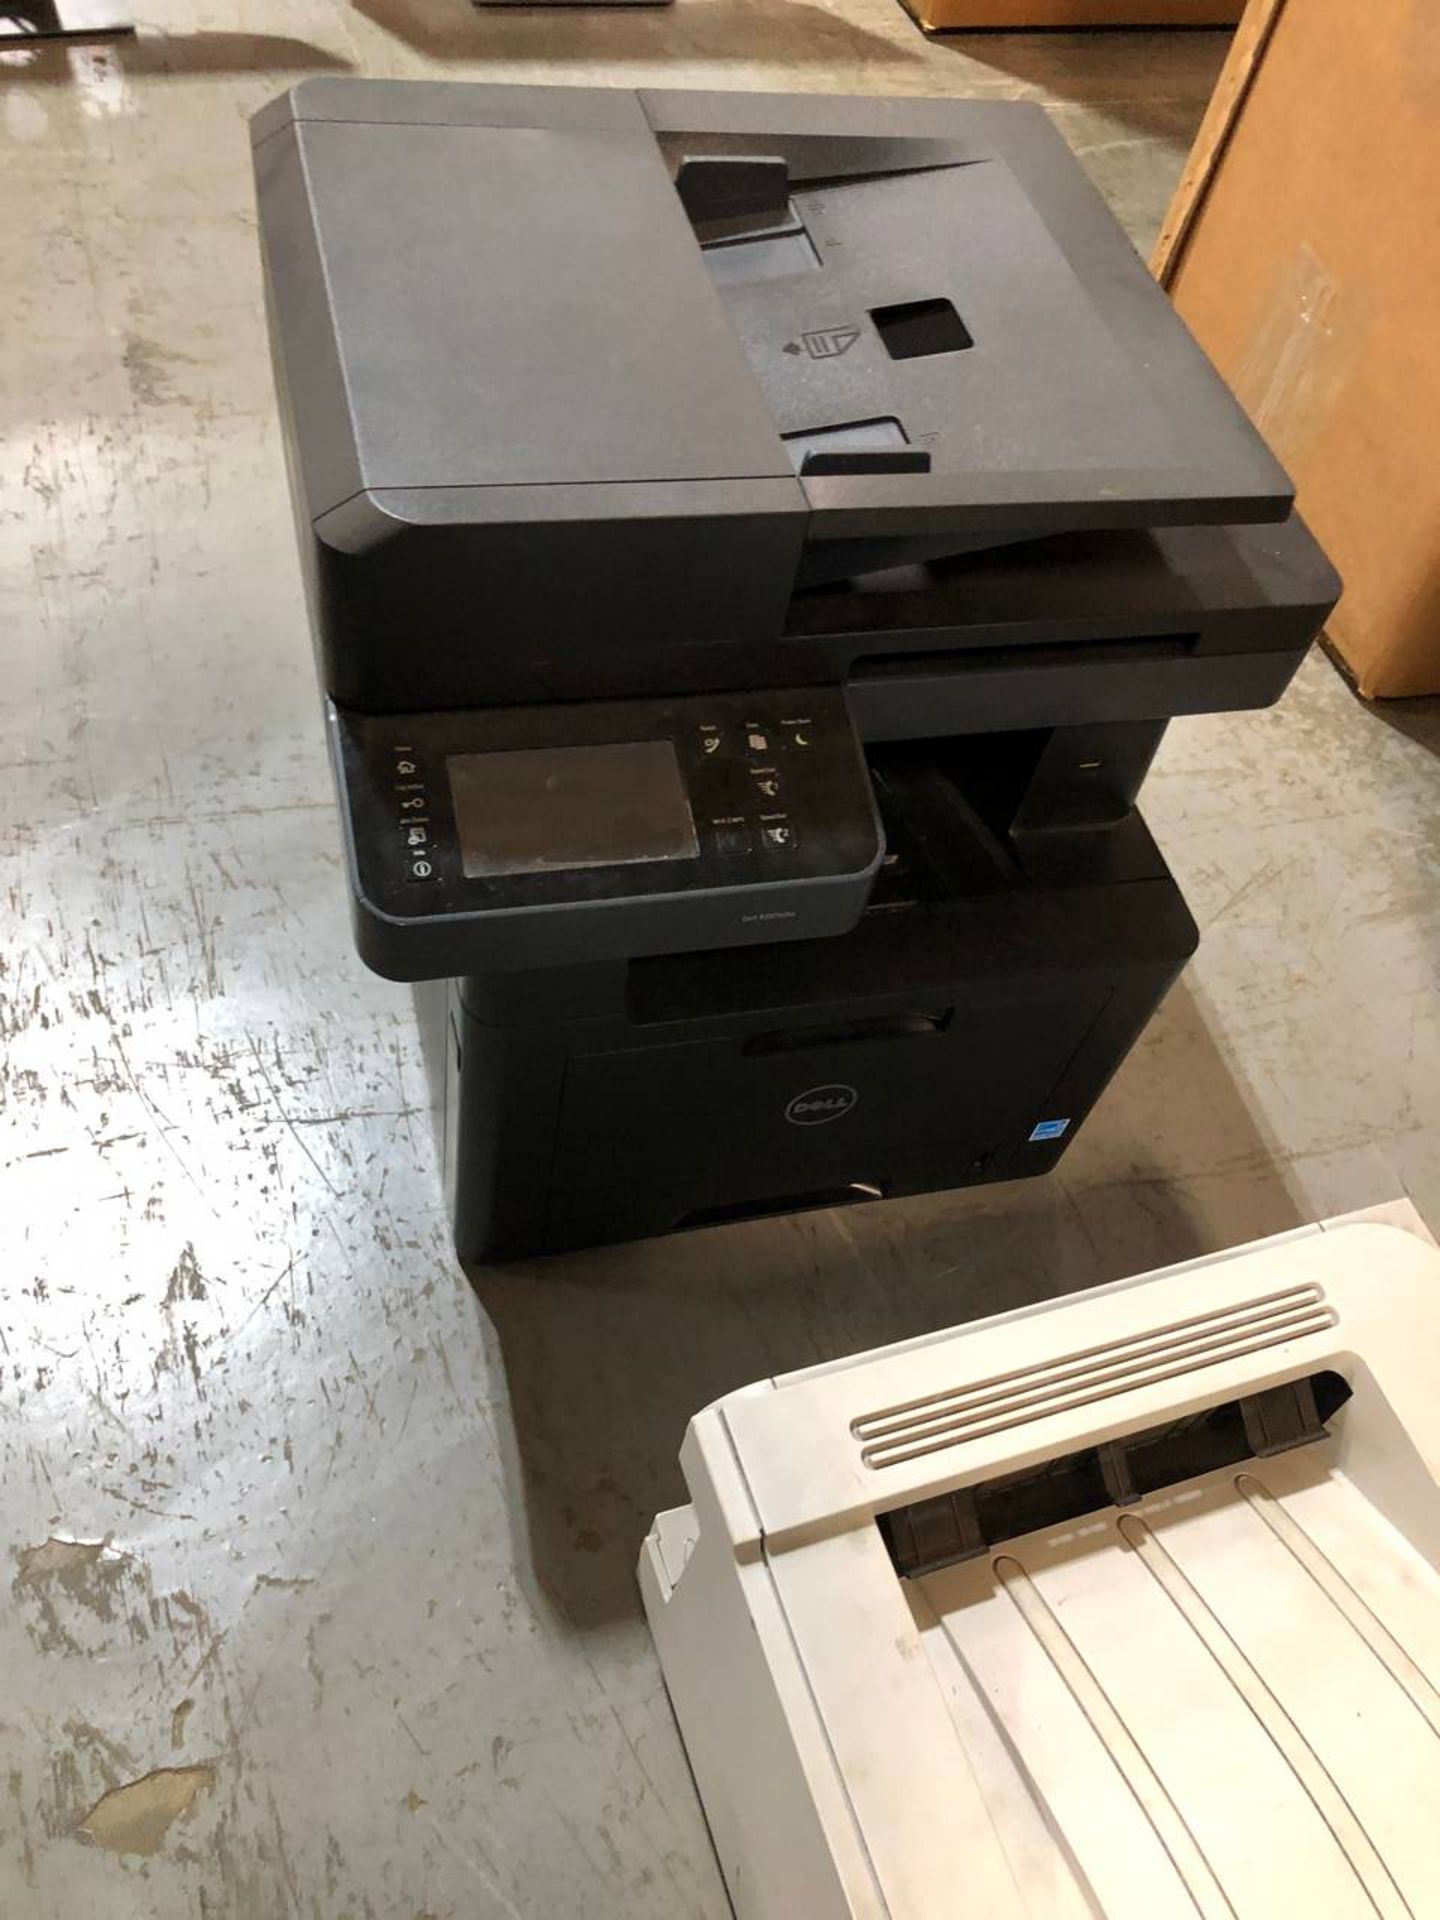 4 Printers - Image 2 of 3